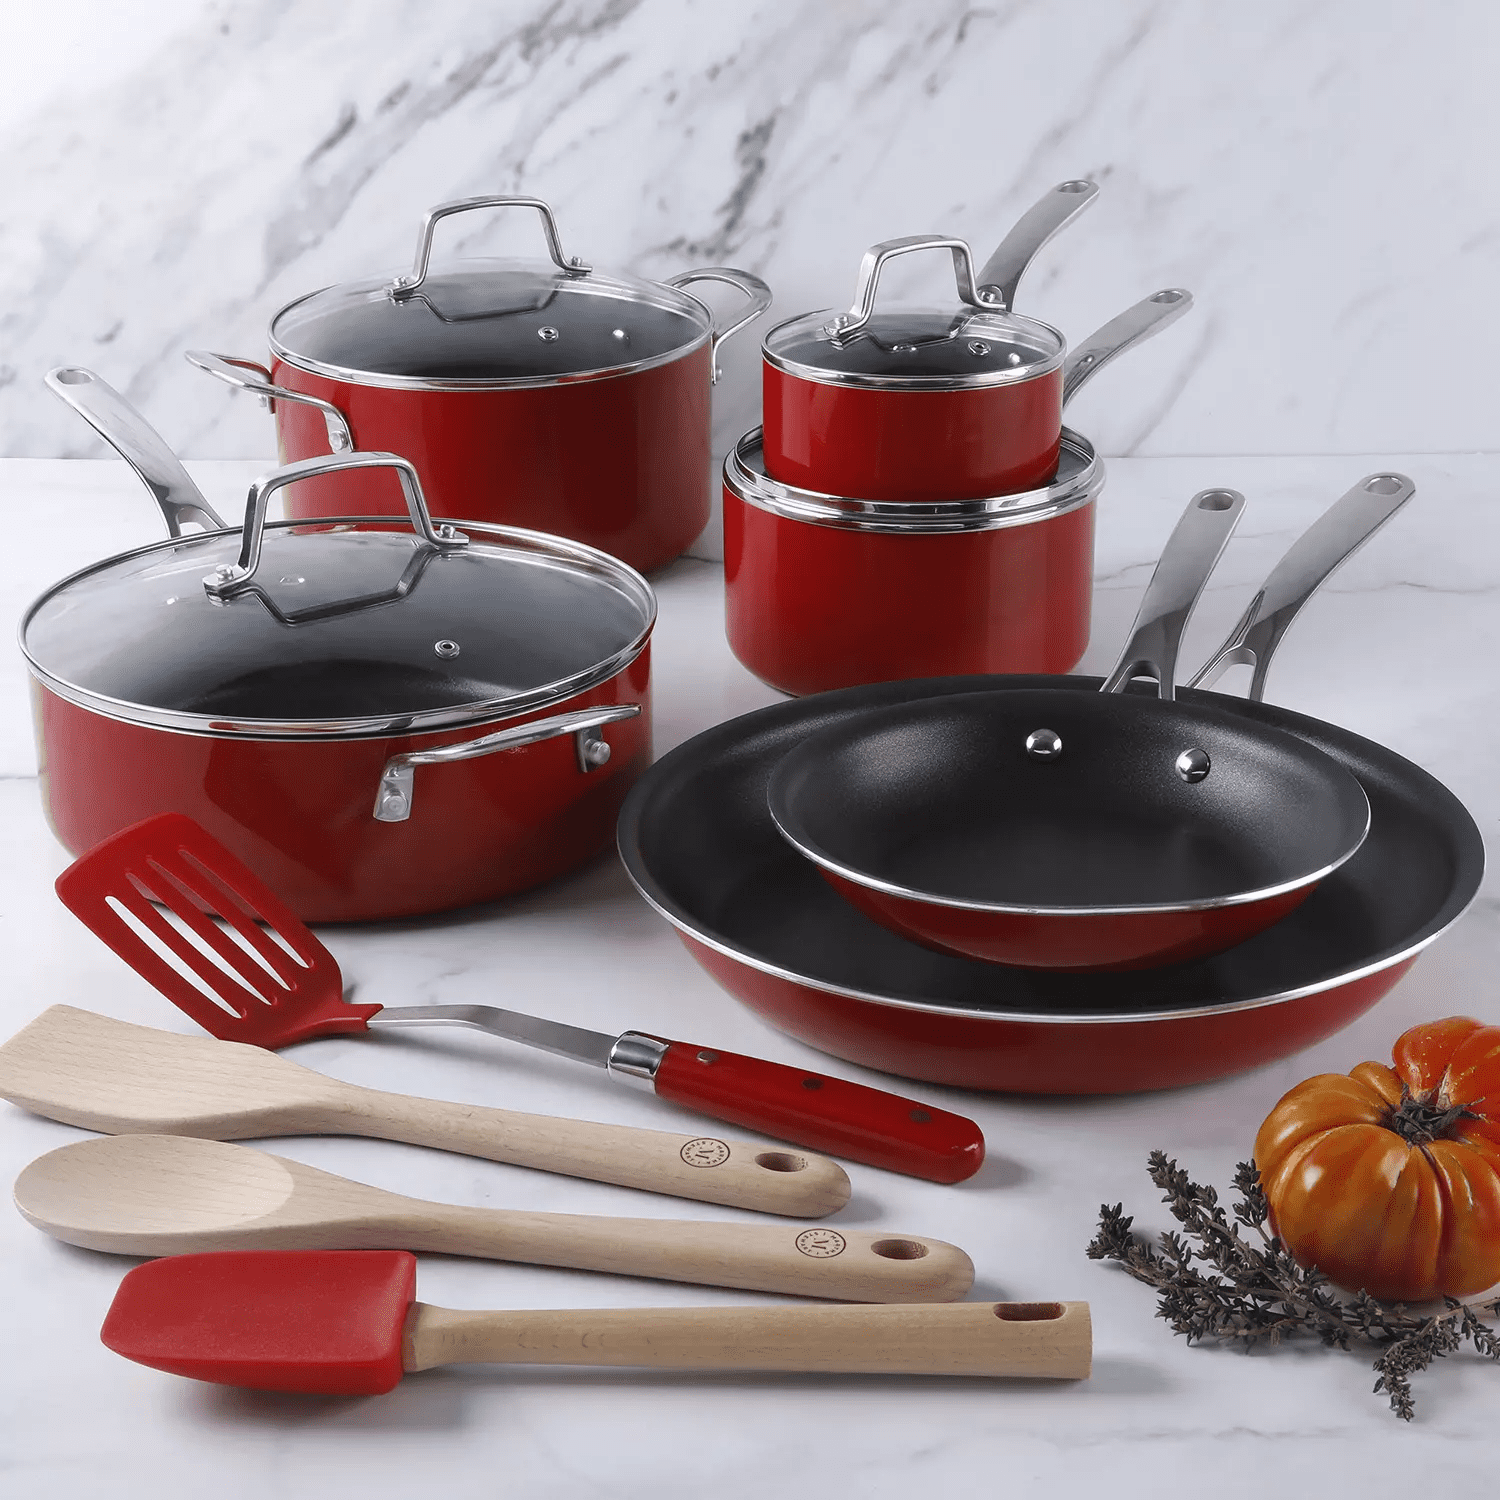 Details about   Martha Stewart 12-Piece Hard Anodized Aluminum Cookware SetS 